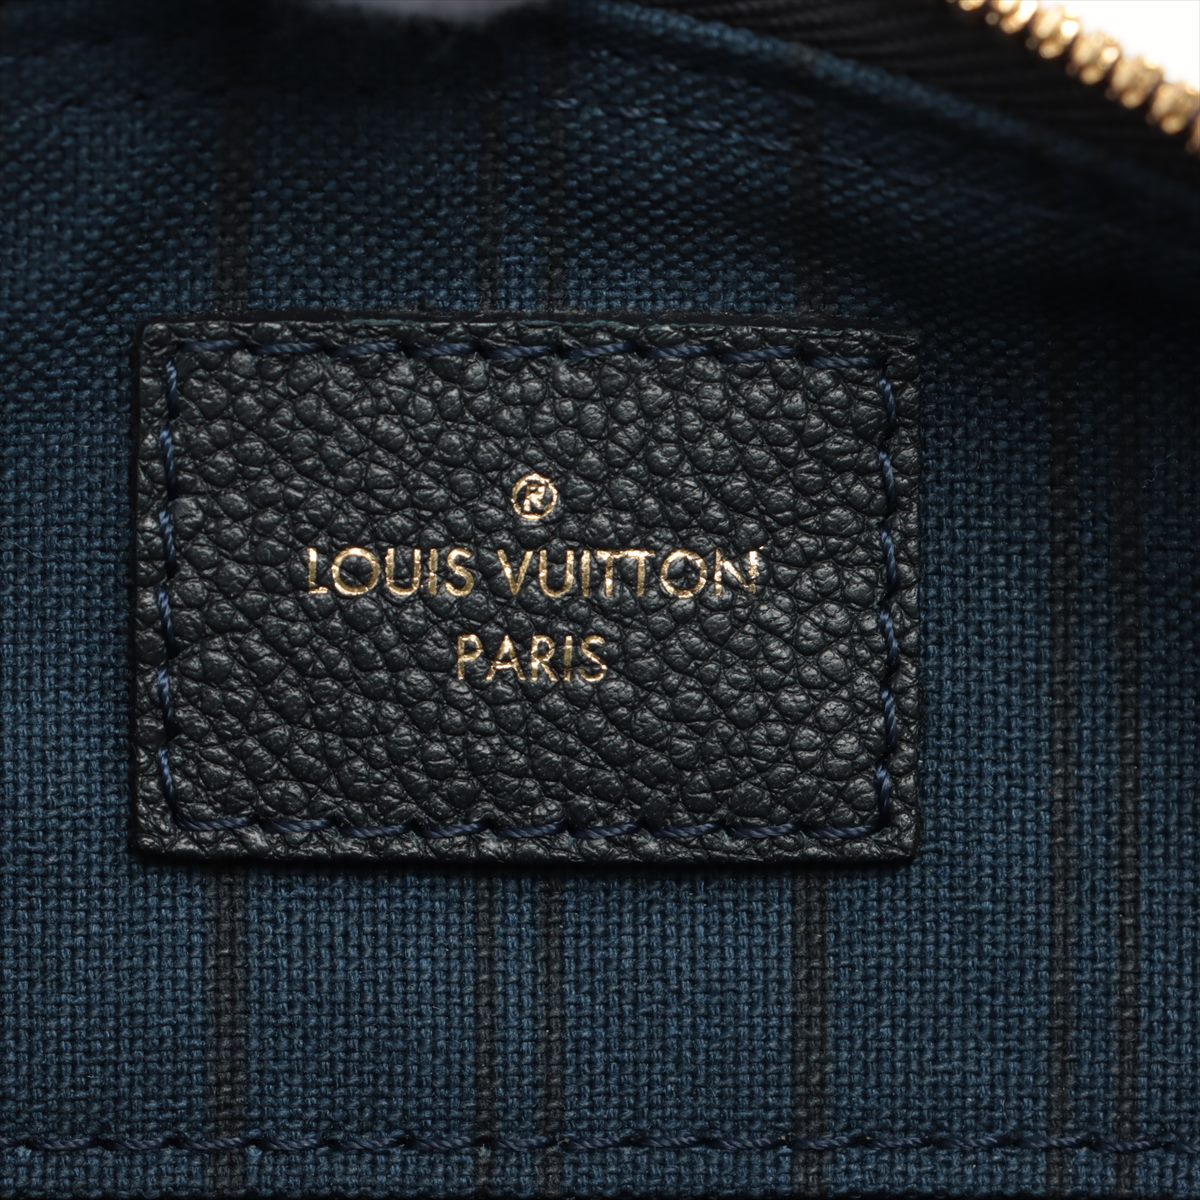 Louis Vuitton Speedy Bandoulière 25 in Monogram Empreinte Noir